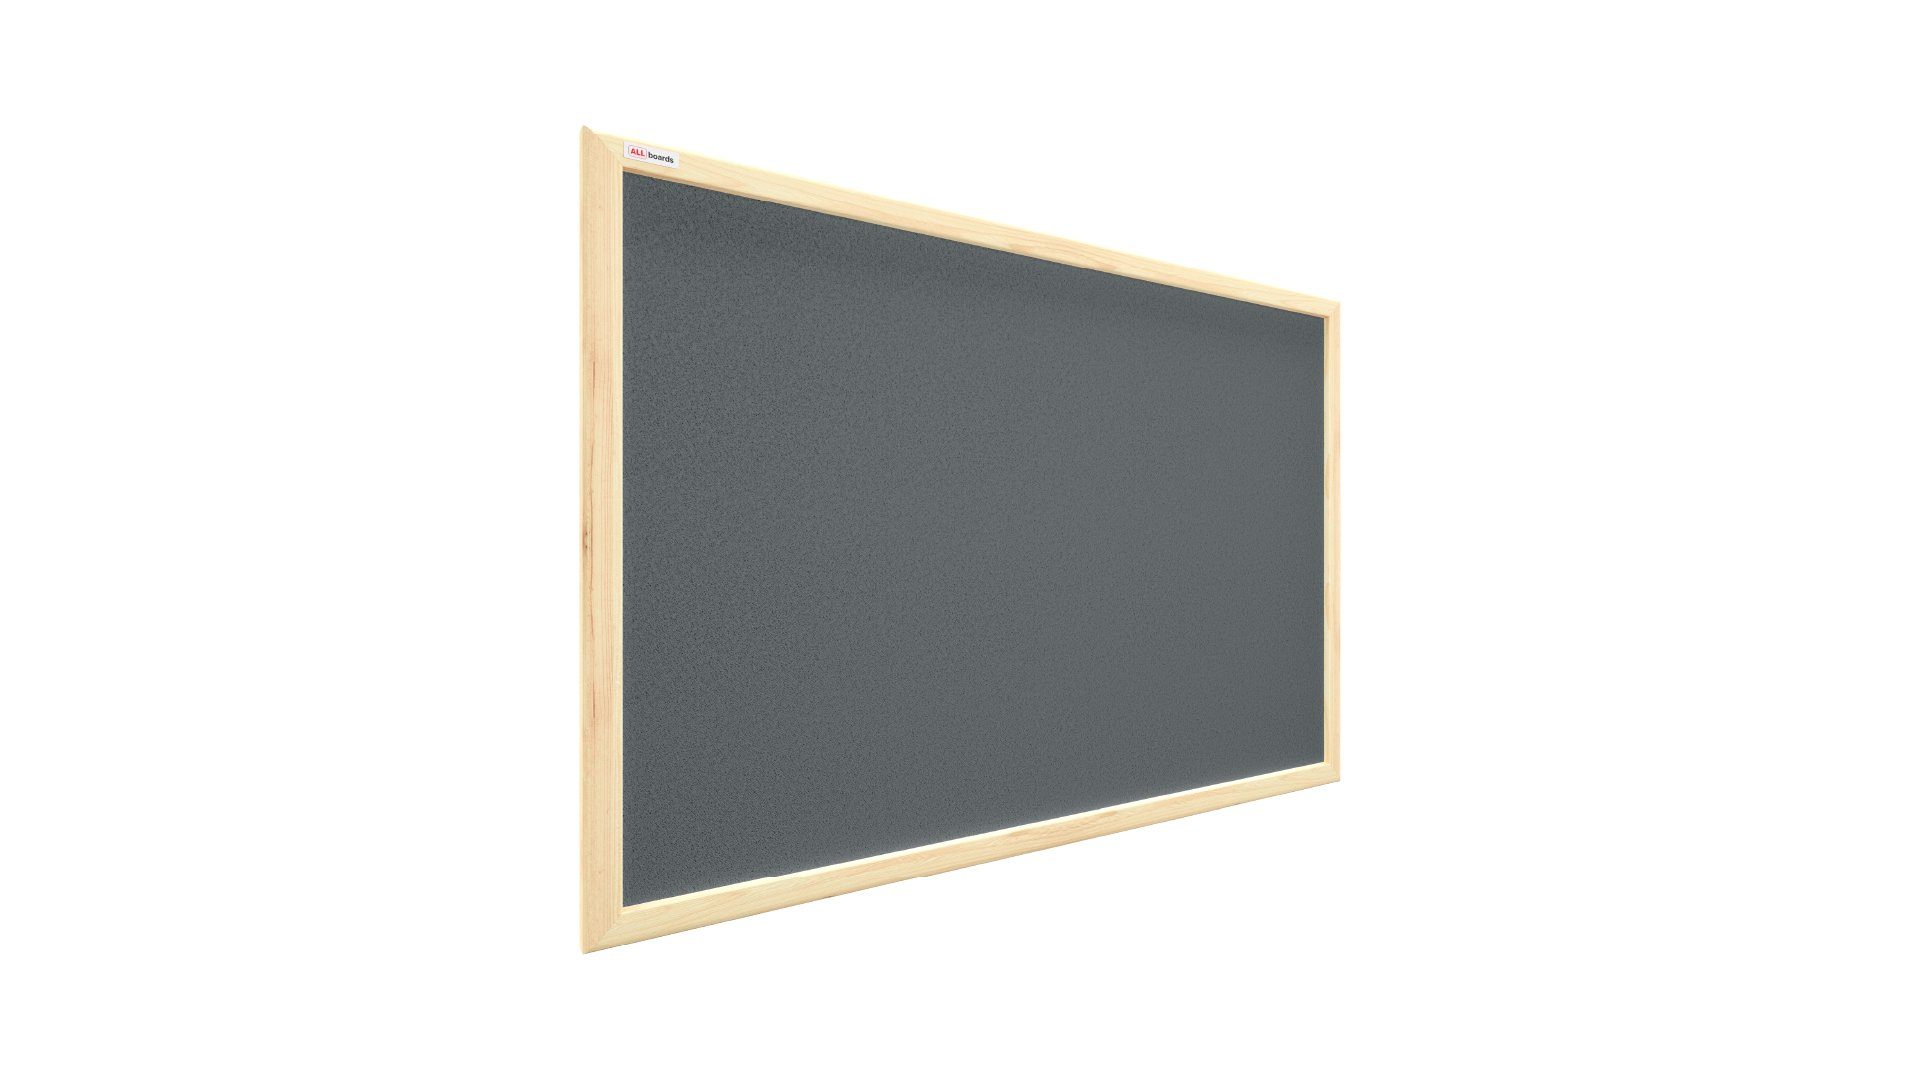 ALLboards Tafel ALLboards Korktafel Memoboard Pinnwand Wandtafel farbiger Rahmen